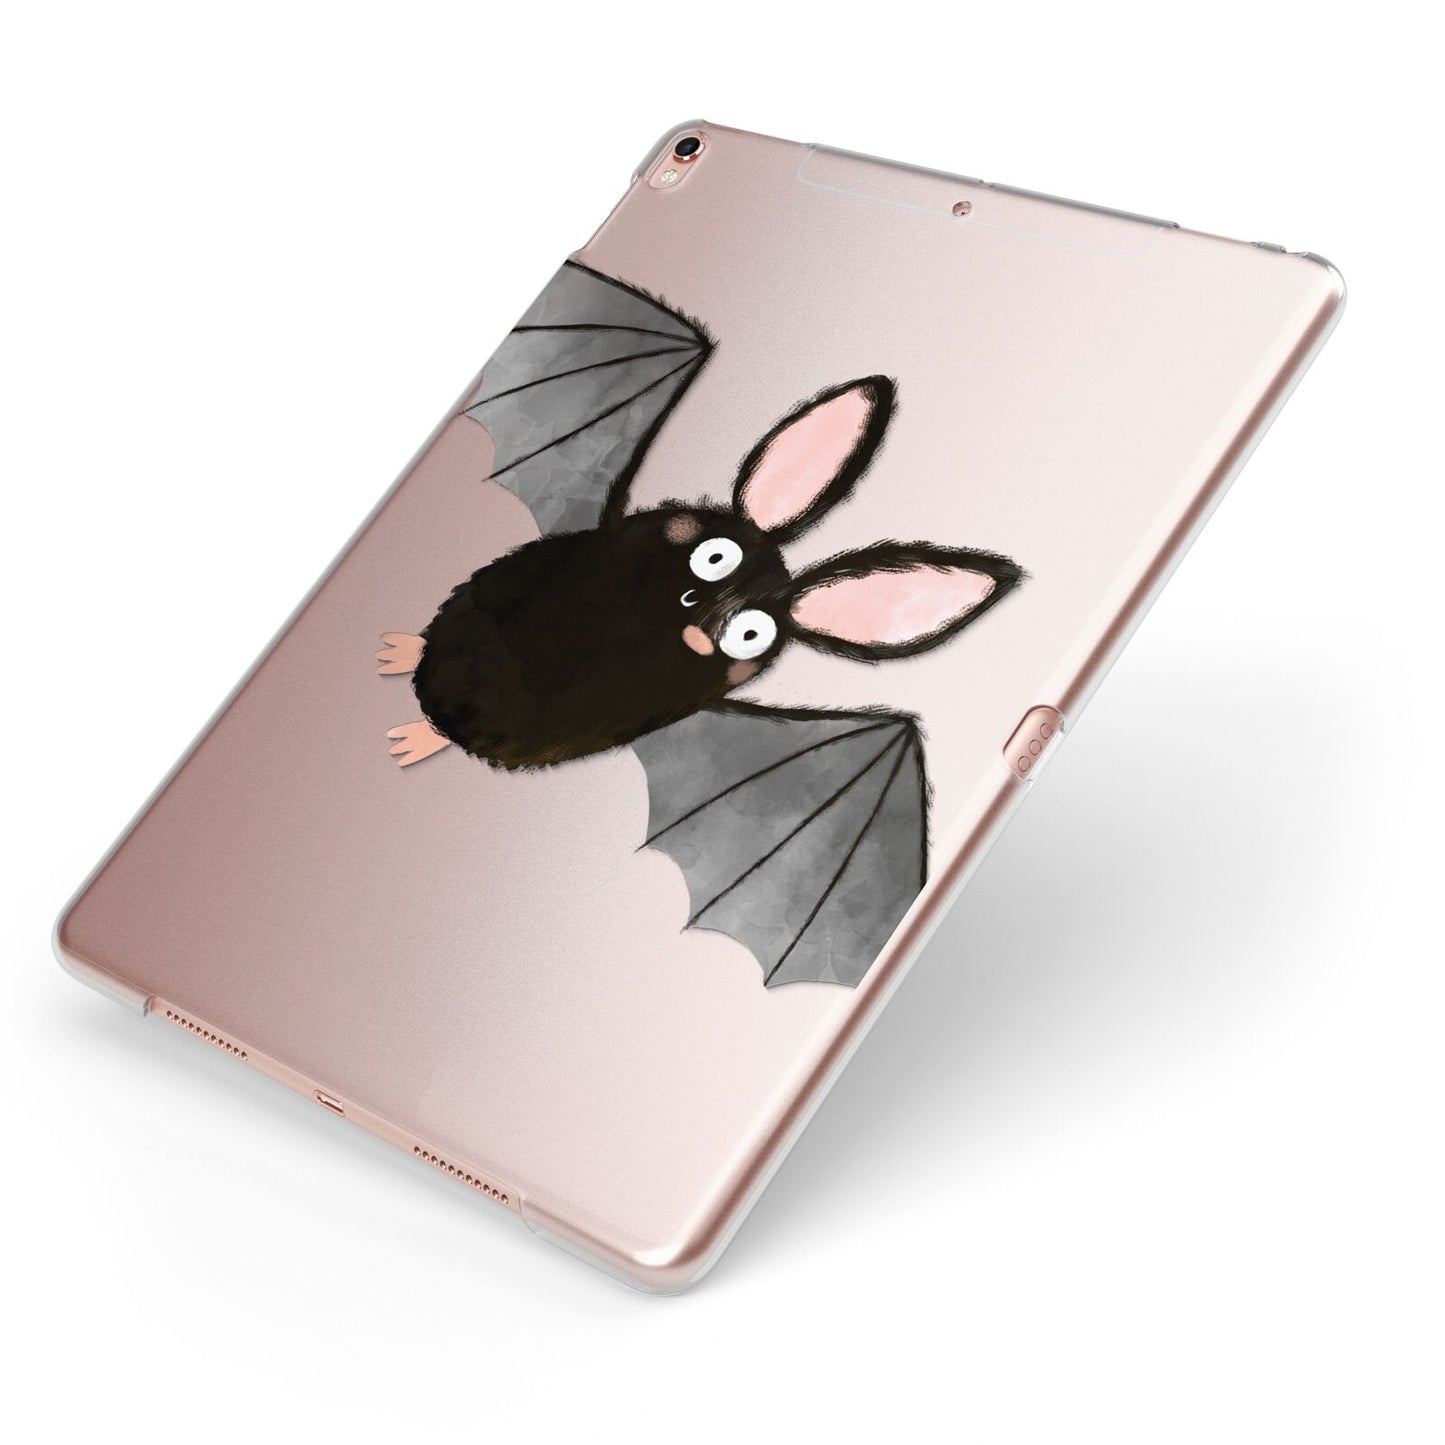 Bat Illustration Apple iPad Case on Rose Gold iPad Side View